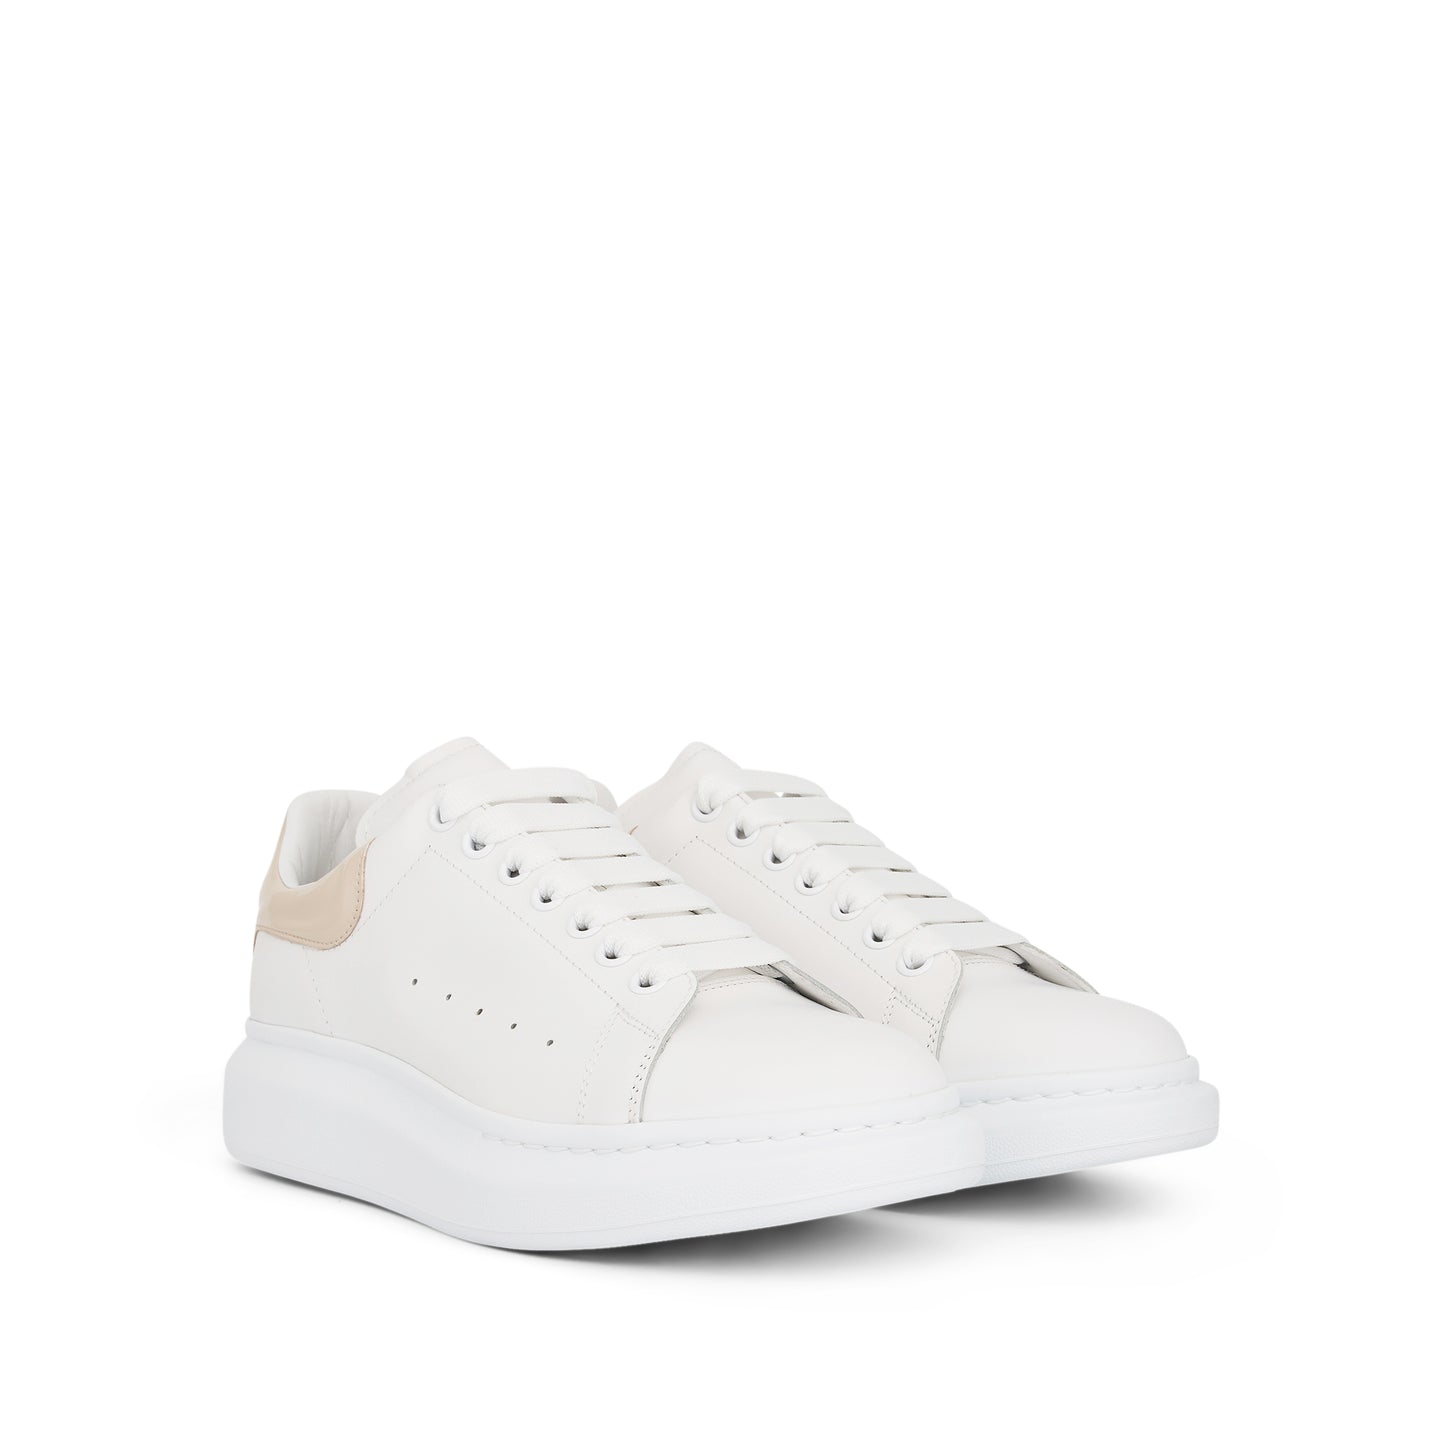 Larry Oversized Sneaker in White/Oyster